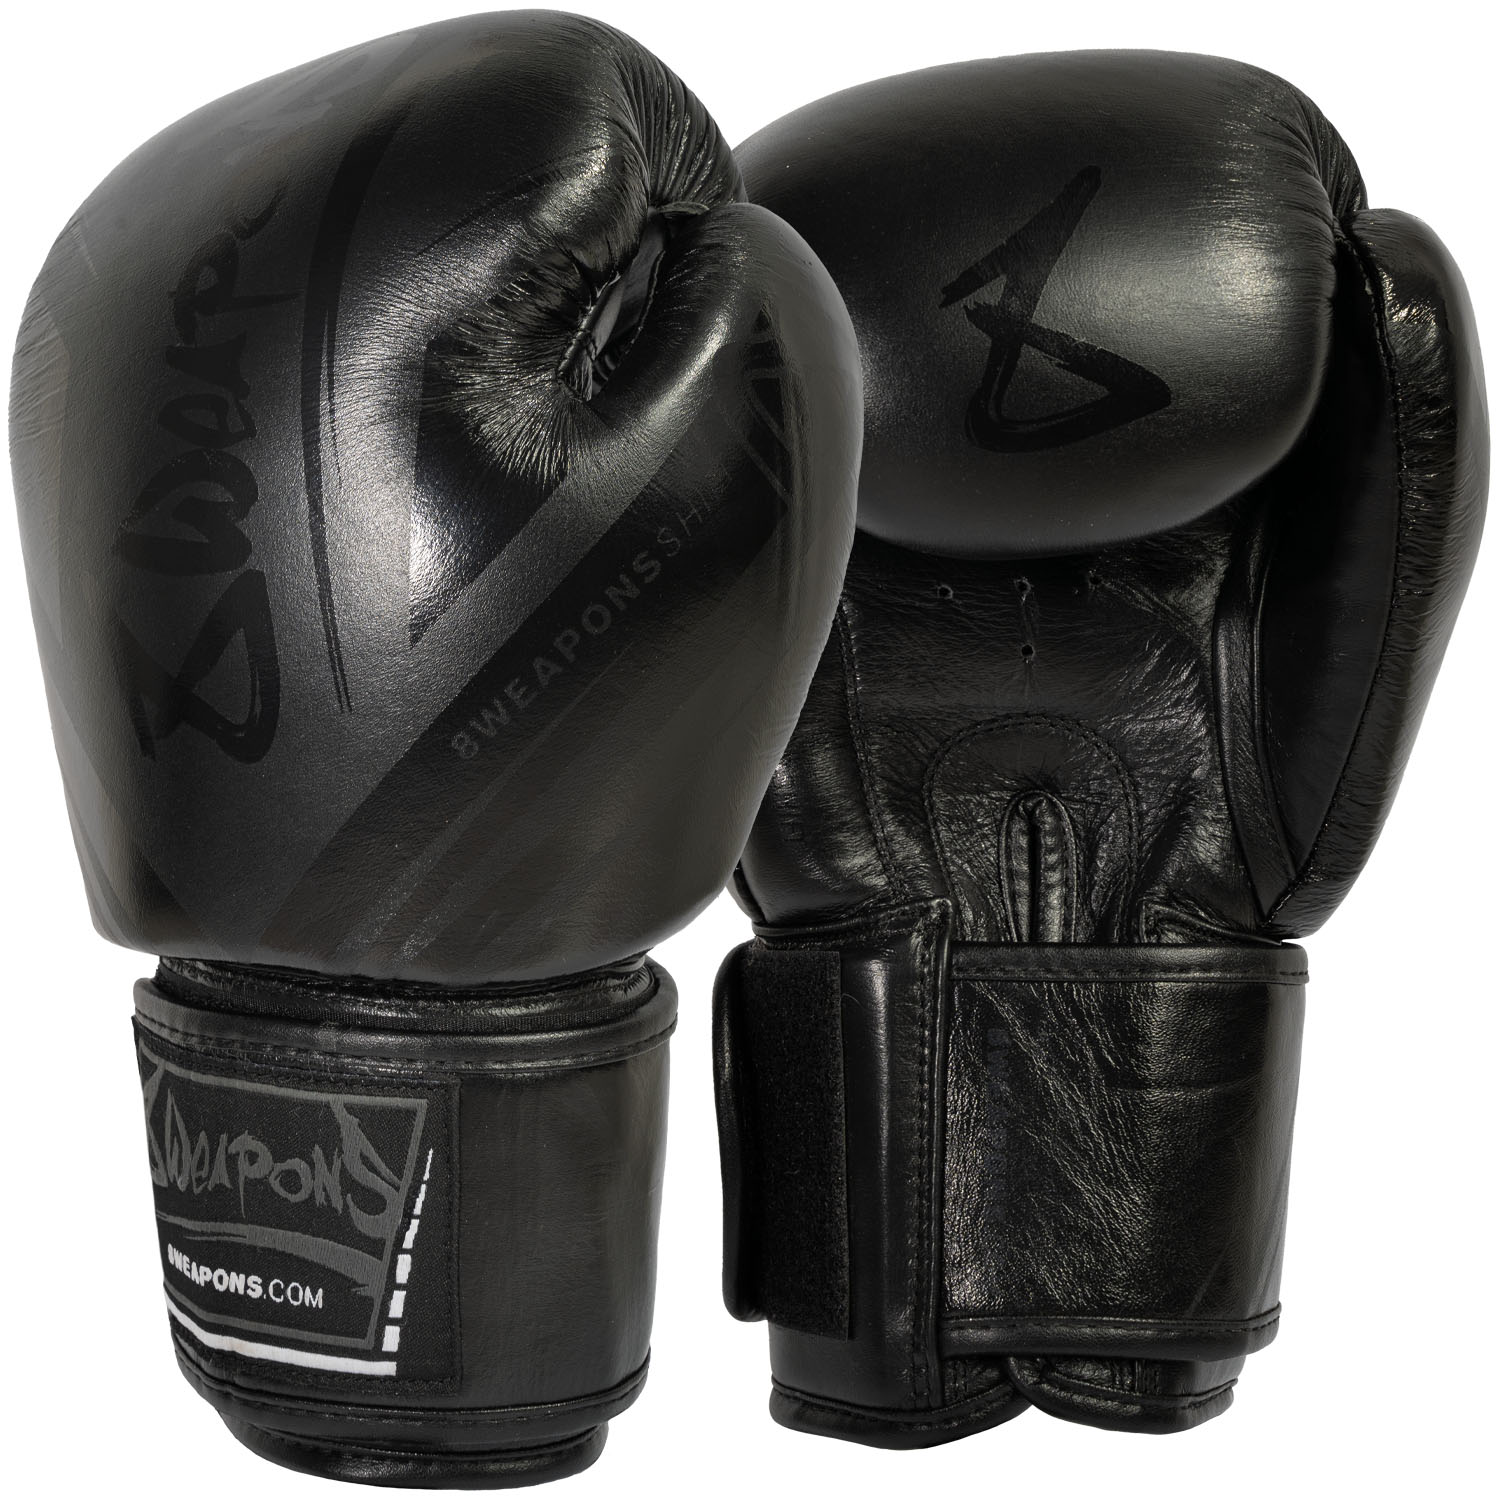 8 WEAPONS Boxing Gloves, Shift, black-matt, 10 Oz